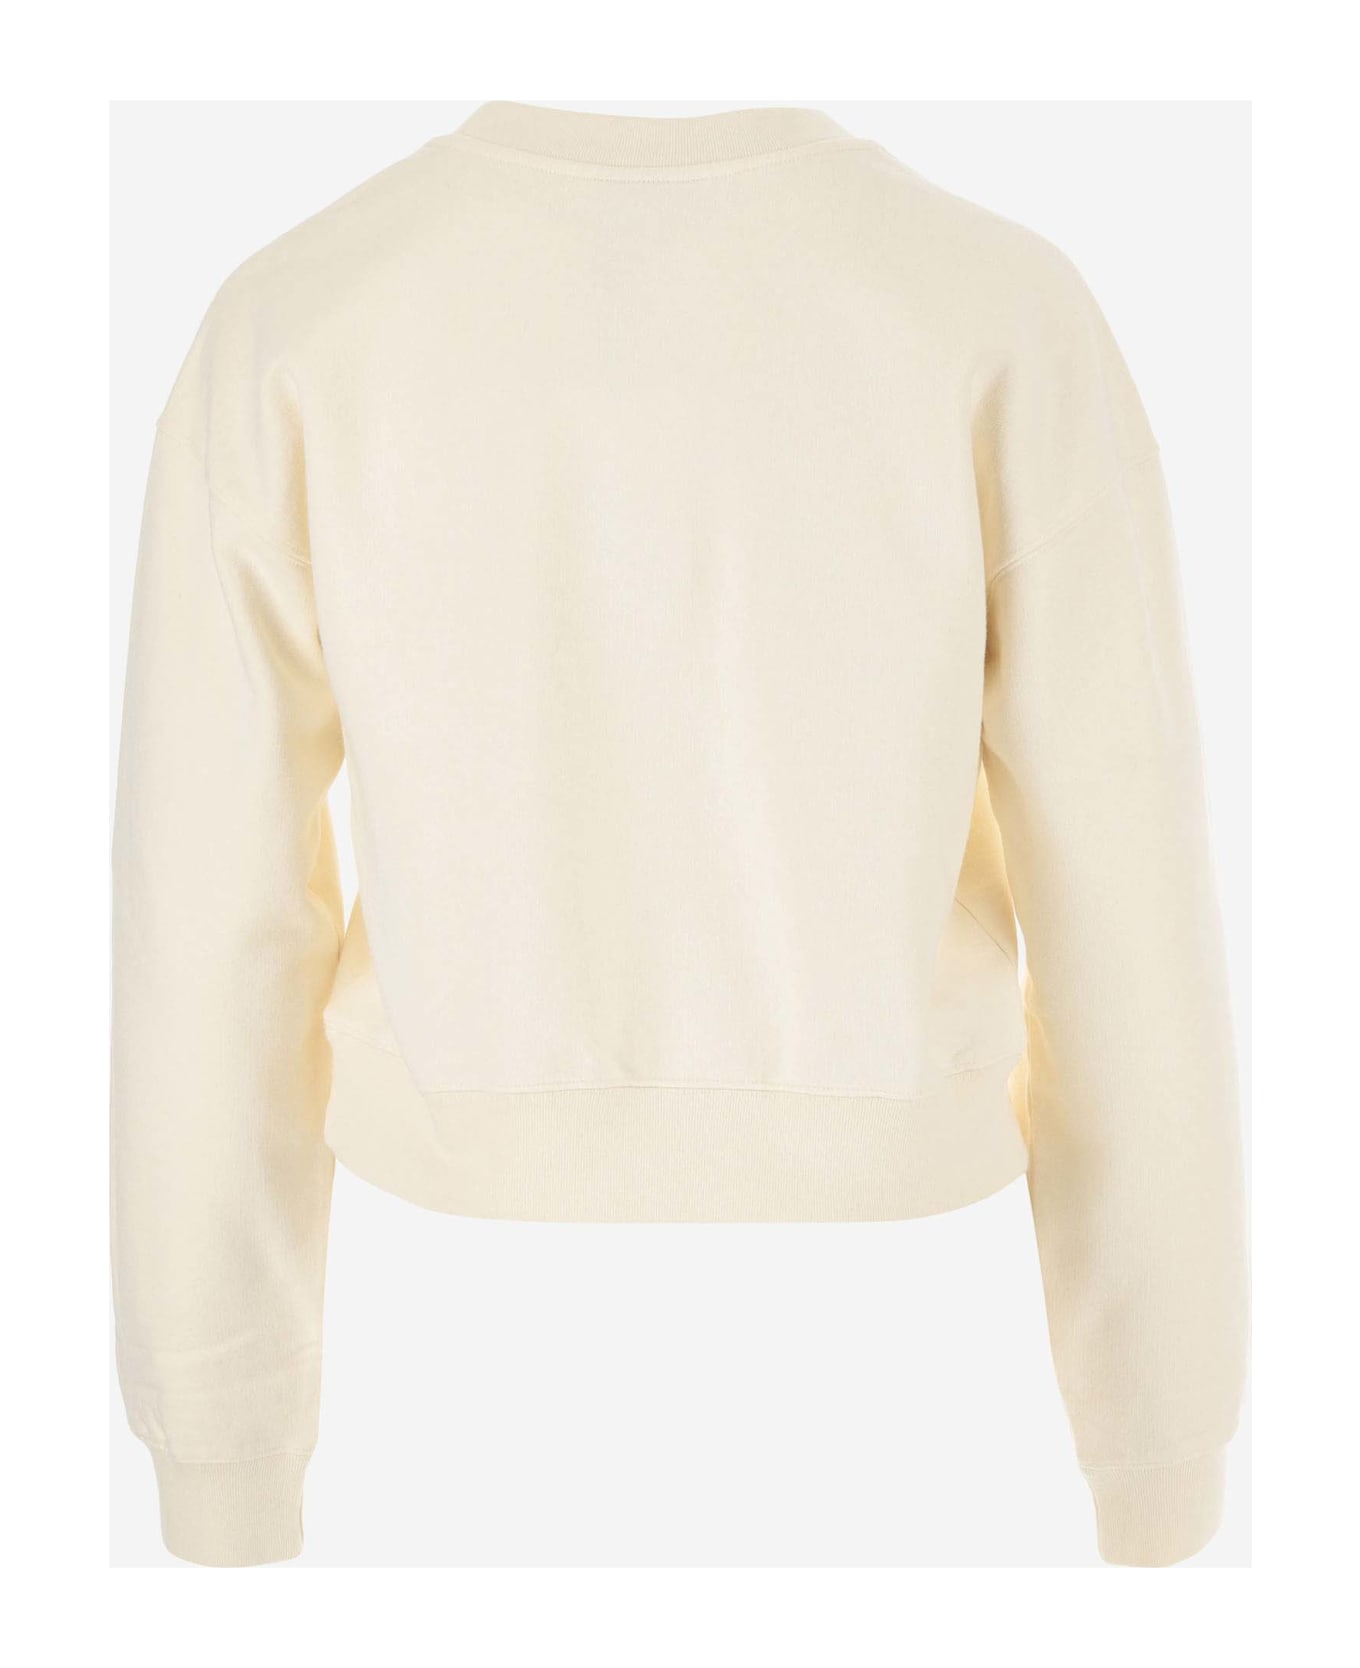 Jacquemus Gros Grain Cotton Sweatshirt - Light beige